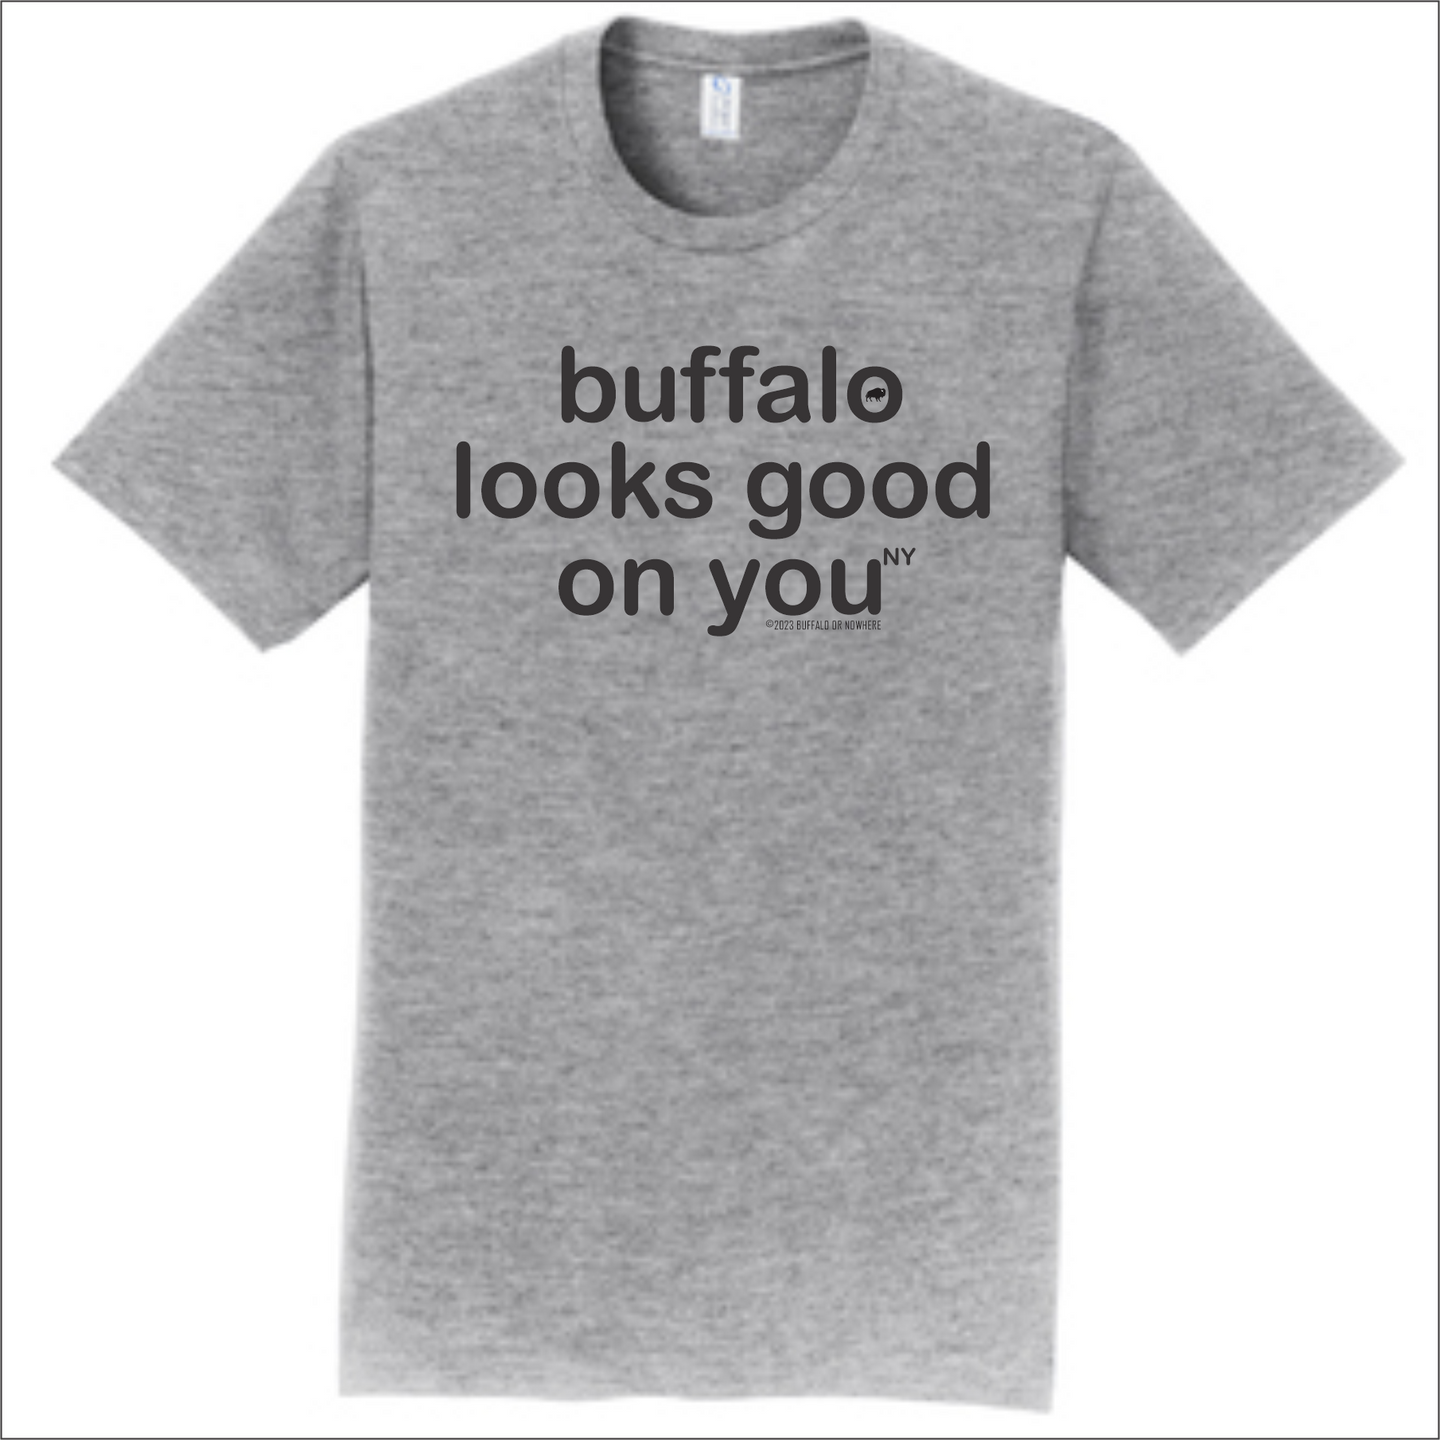 Buffalo looks good on you